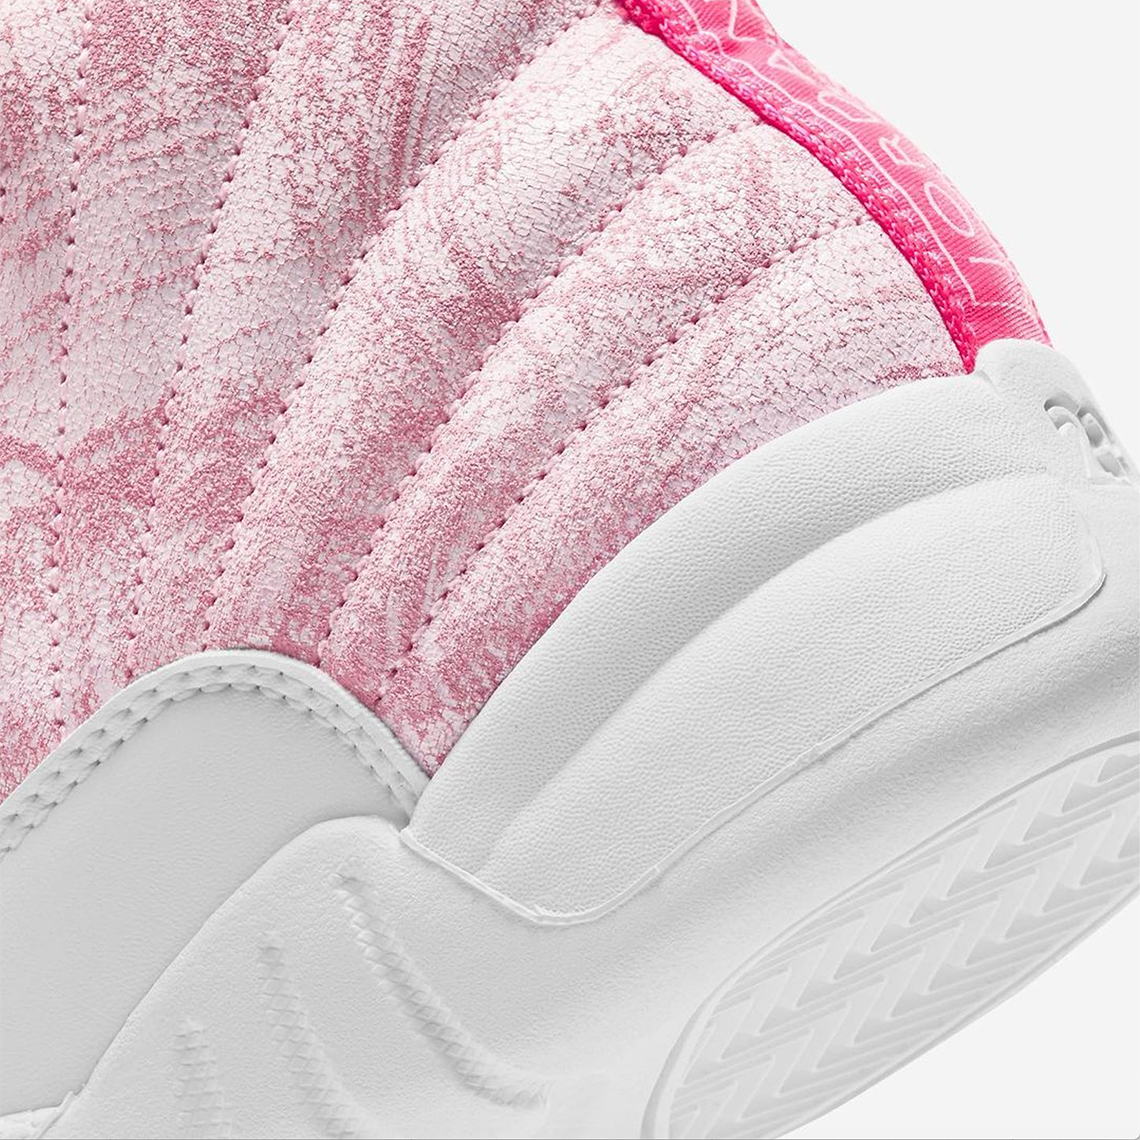 pink and white jordans 12